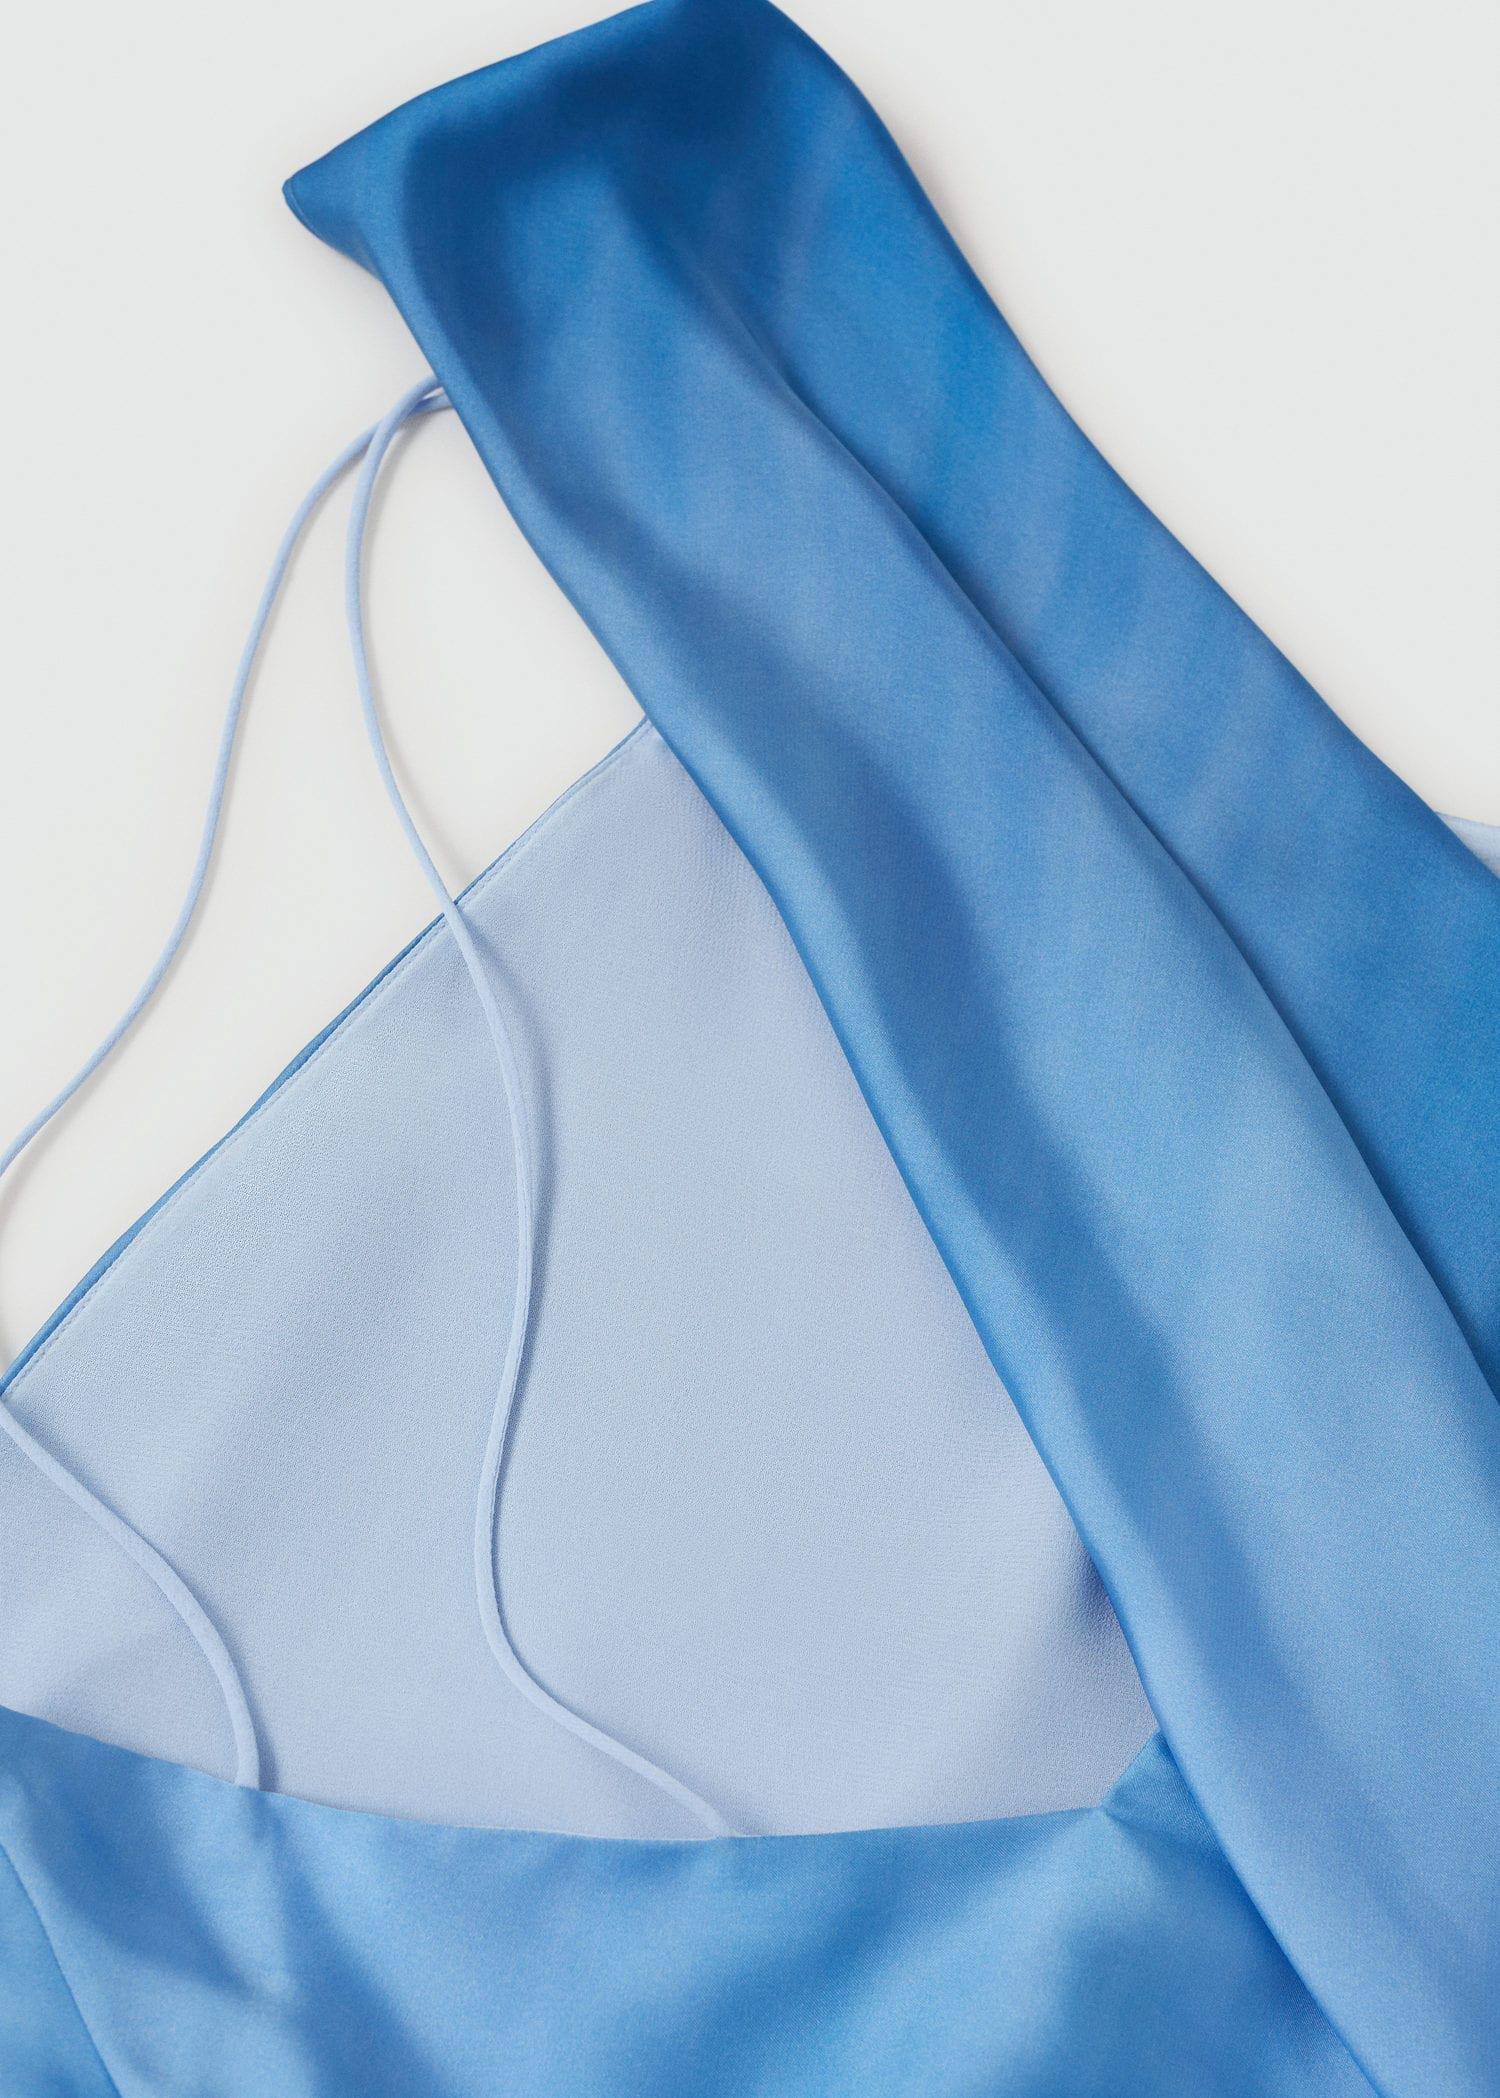 Mango - Blue Asymmetrical Gradient Dress